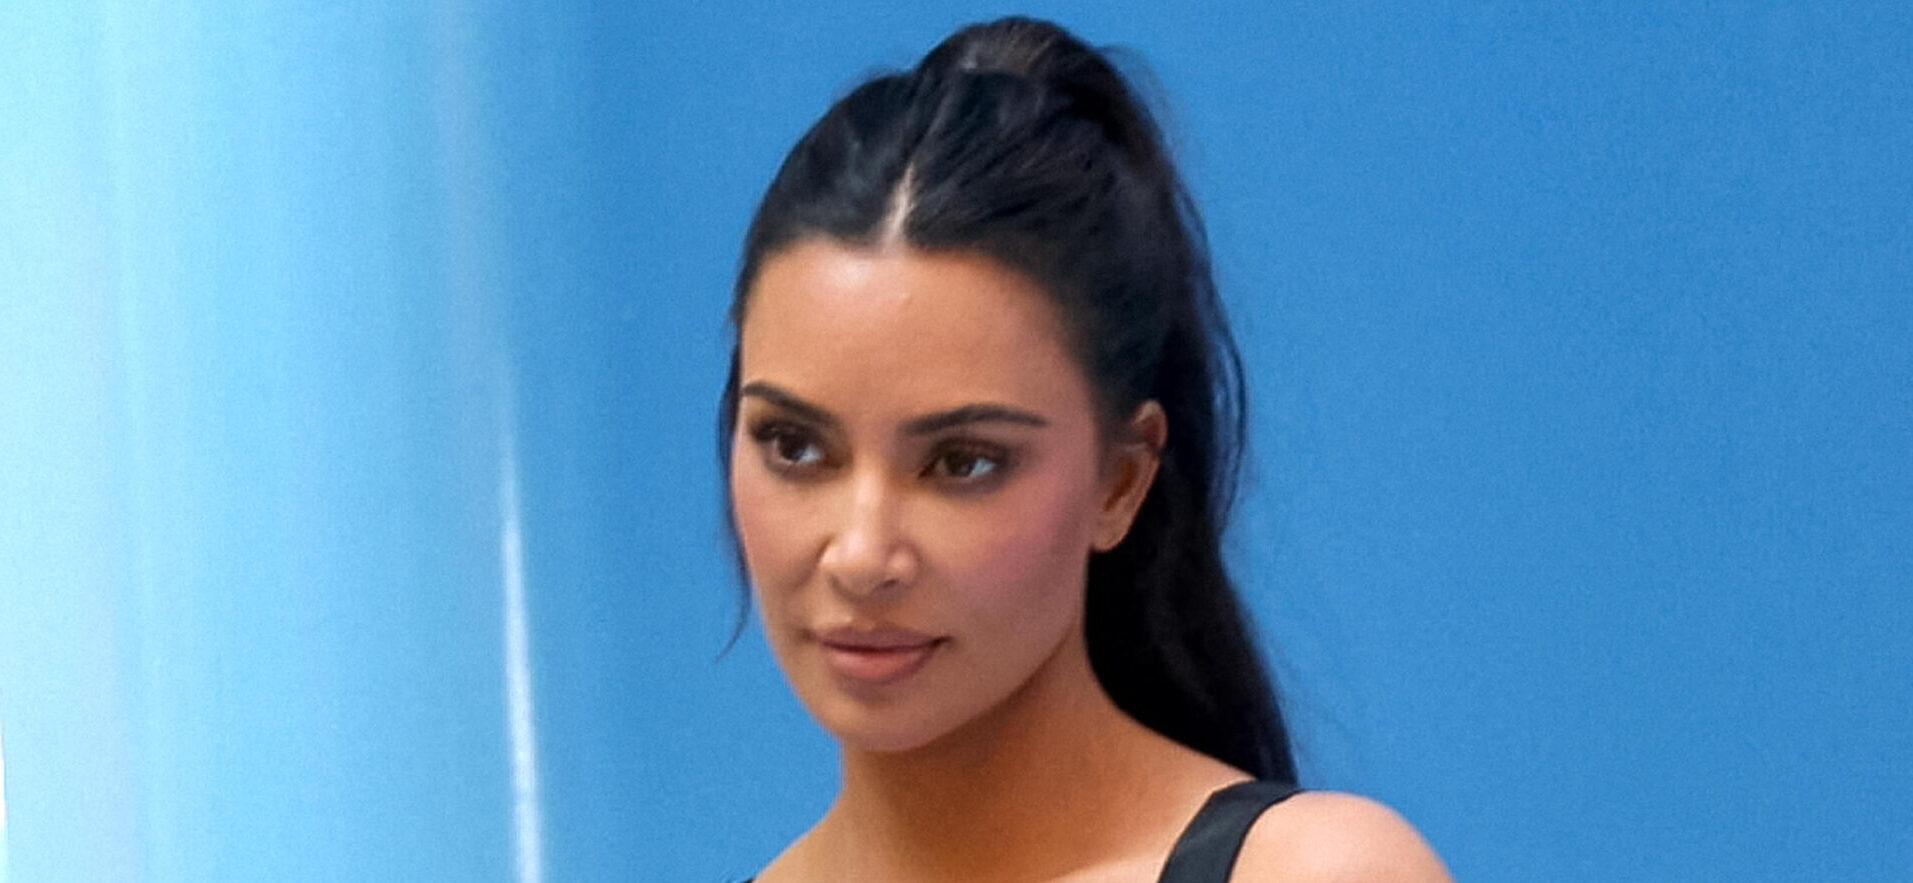 Kim Kardashian’s SKIMS Rises To $4 Billion In Value With Latest Funding Round